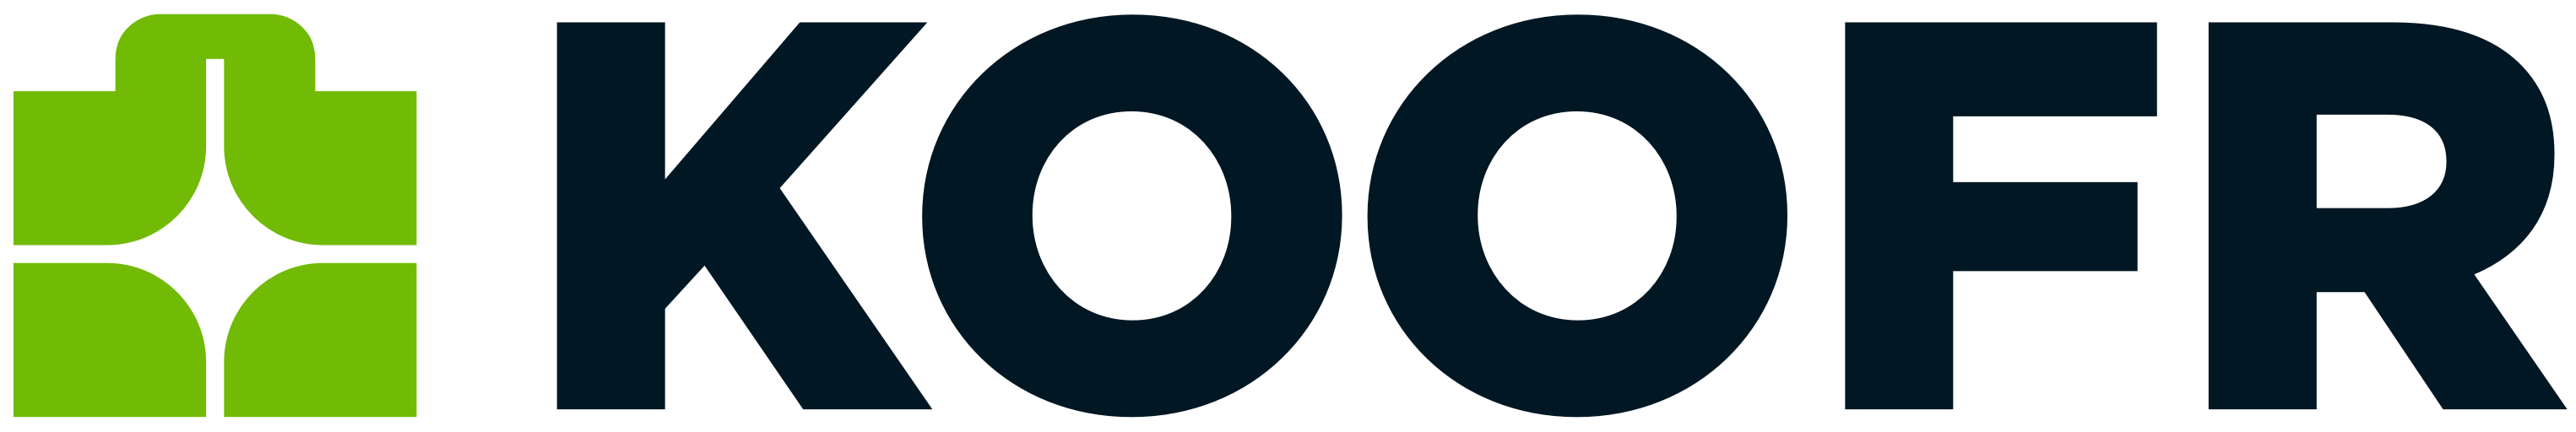 Koofr Logo Original Color